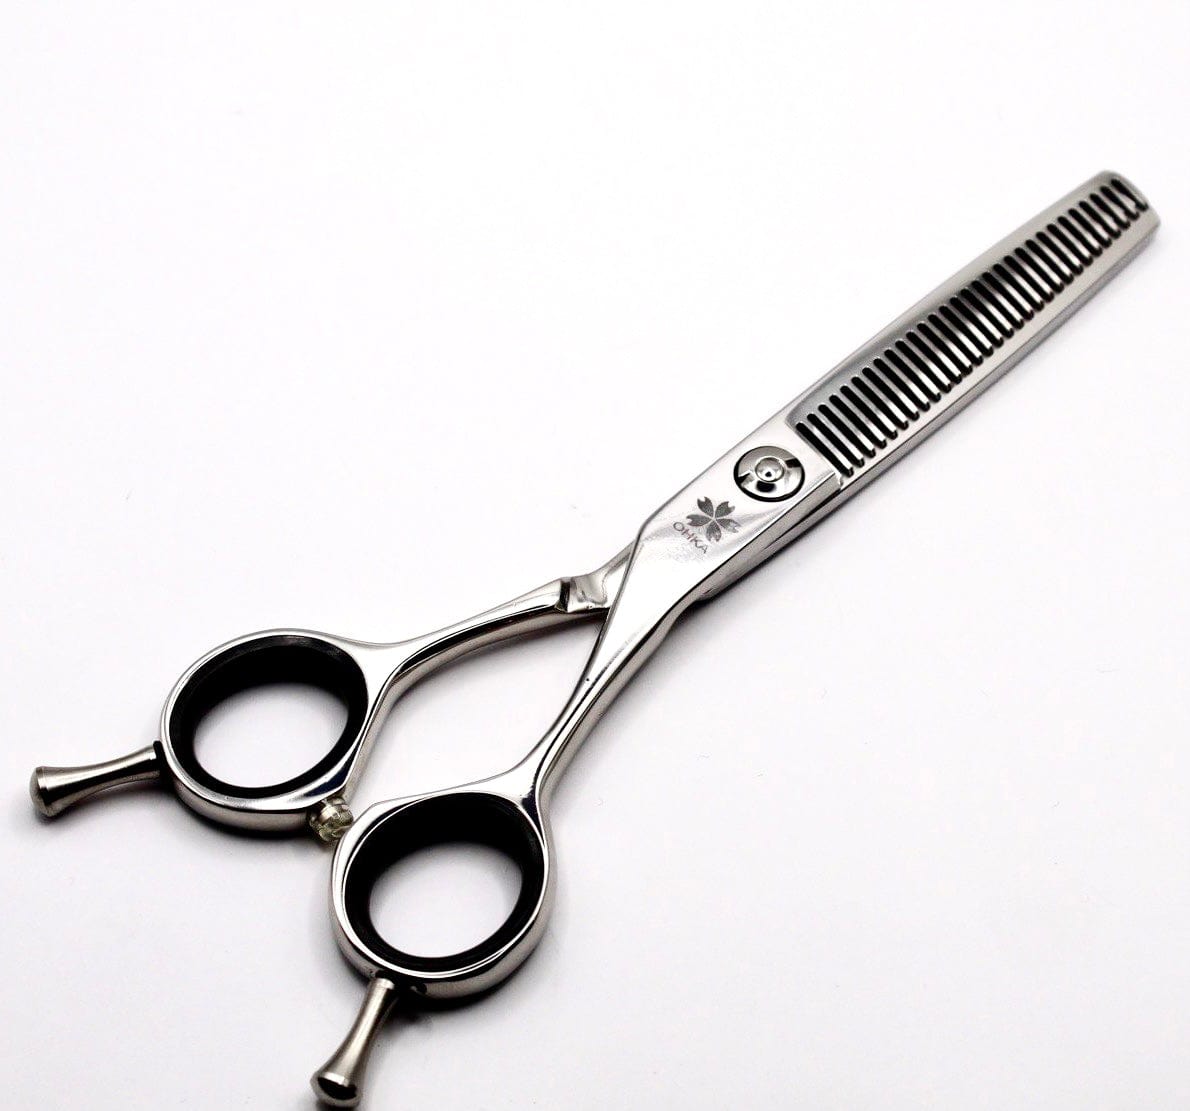 Sakura Hairdressing Scissors OHKA WD630UB  6 inch 30 teeth  reversible